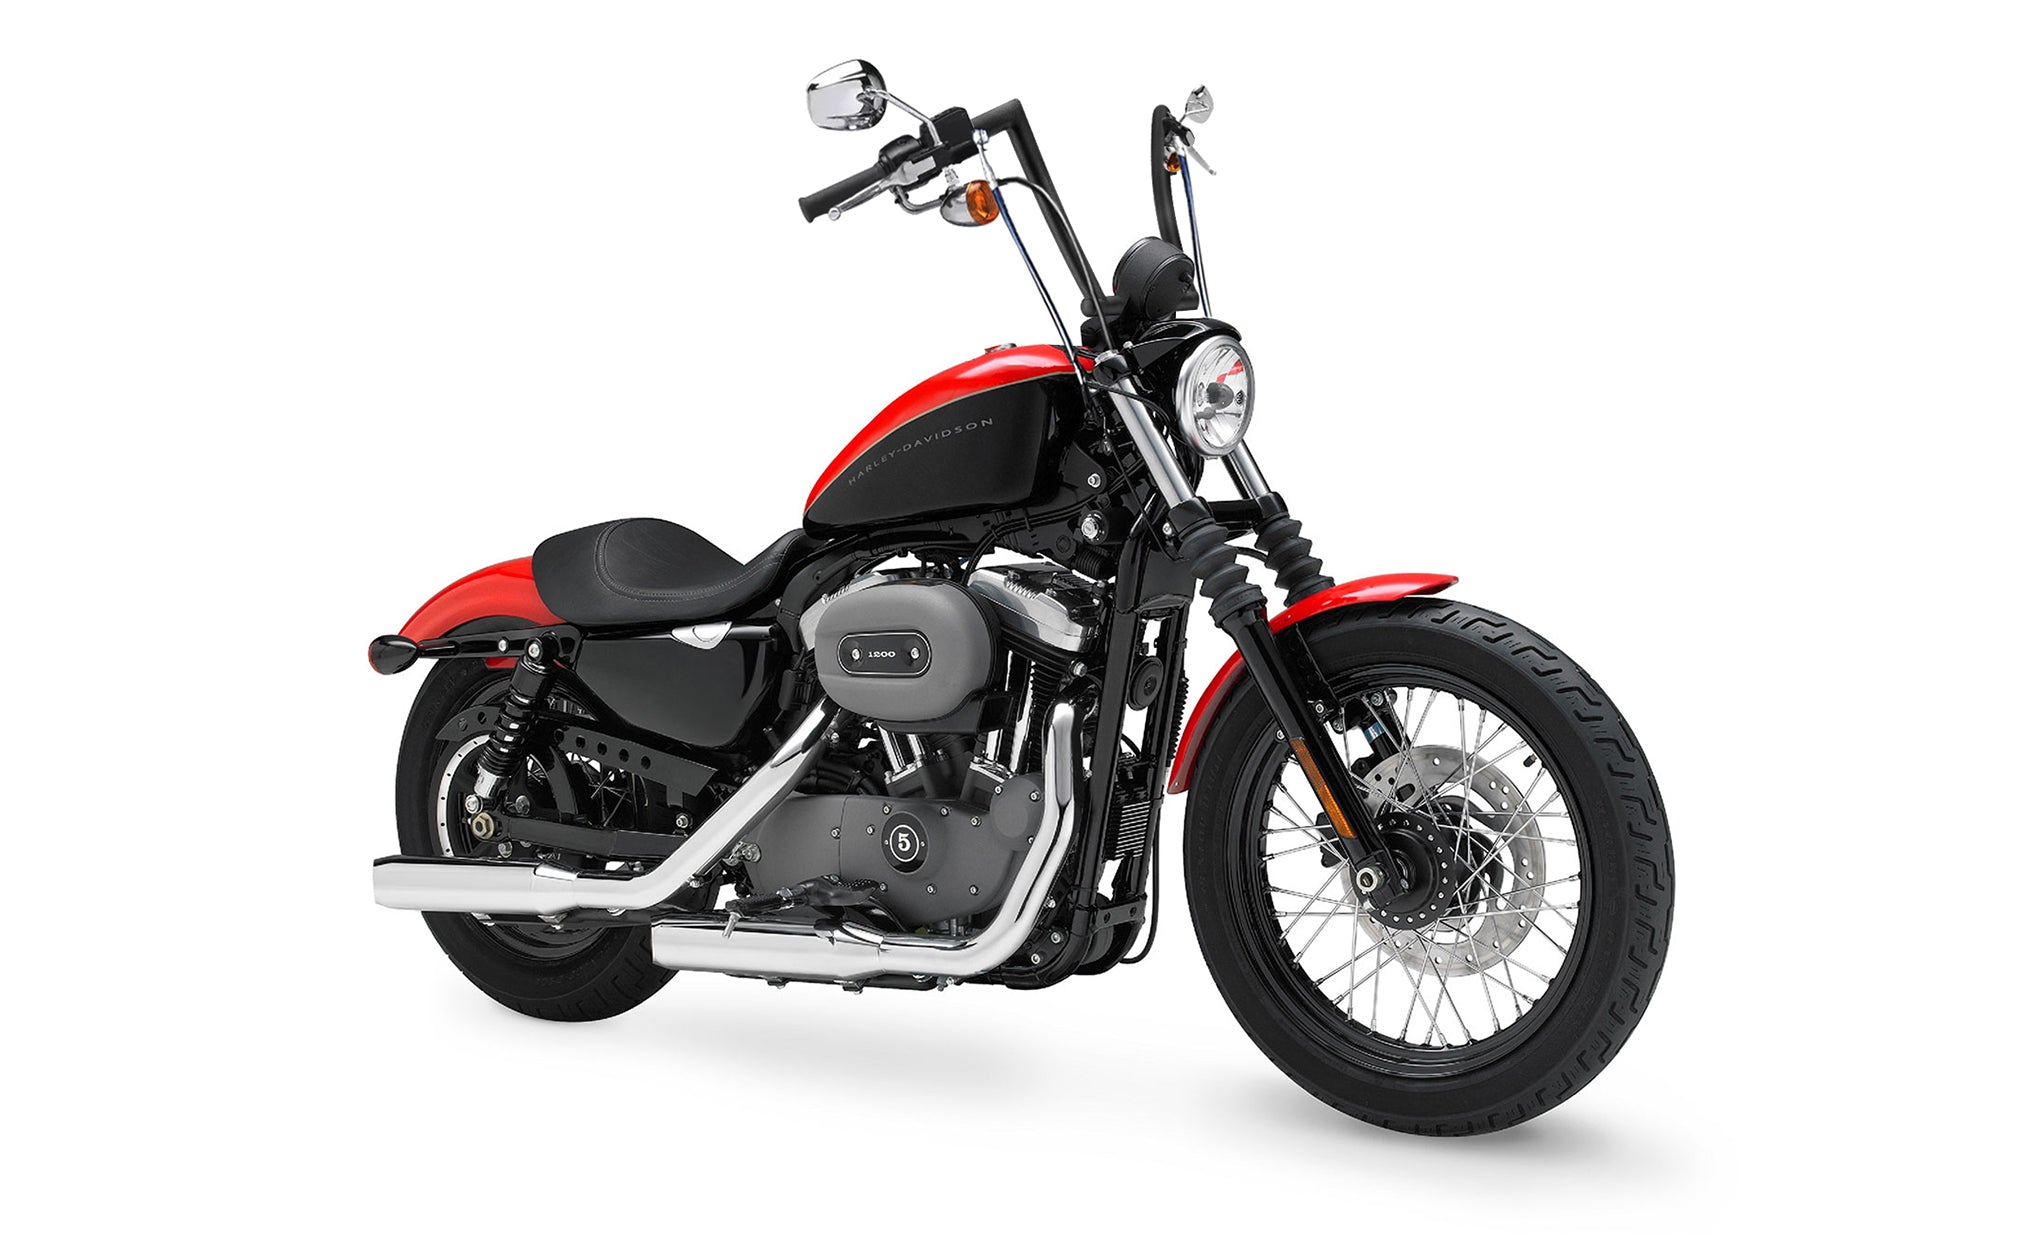 Viking Iron Born 9" Handlebar for Harley Sportster 1200 Nightster XL1200N Matte Black Bag on Bike View @expand